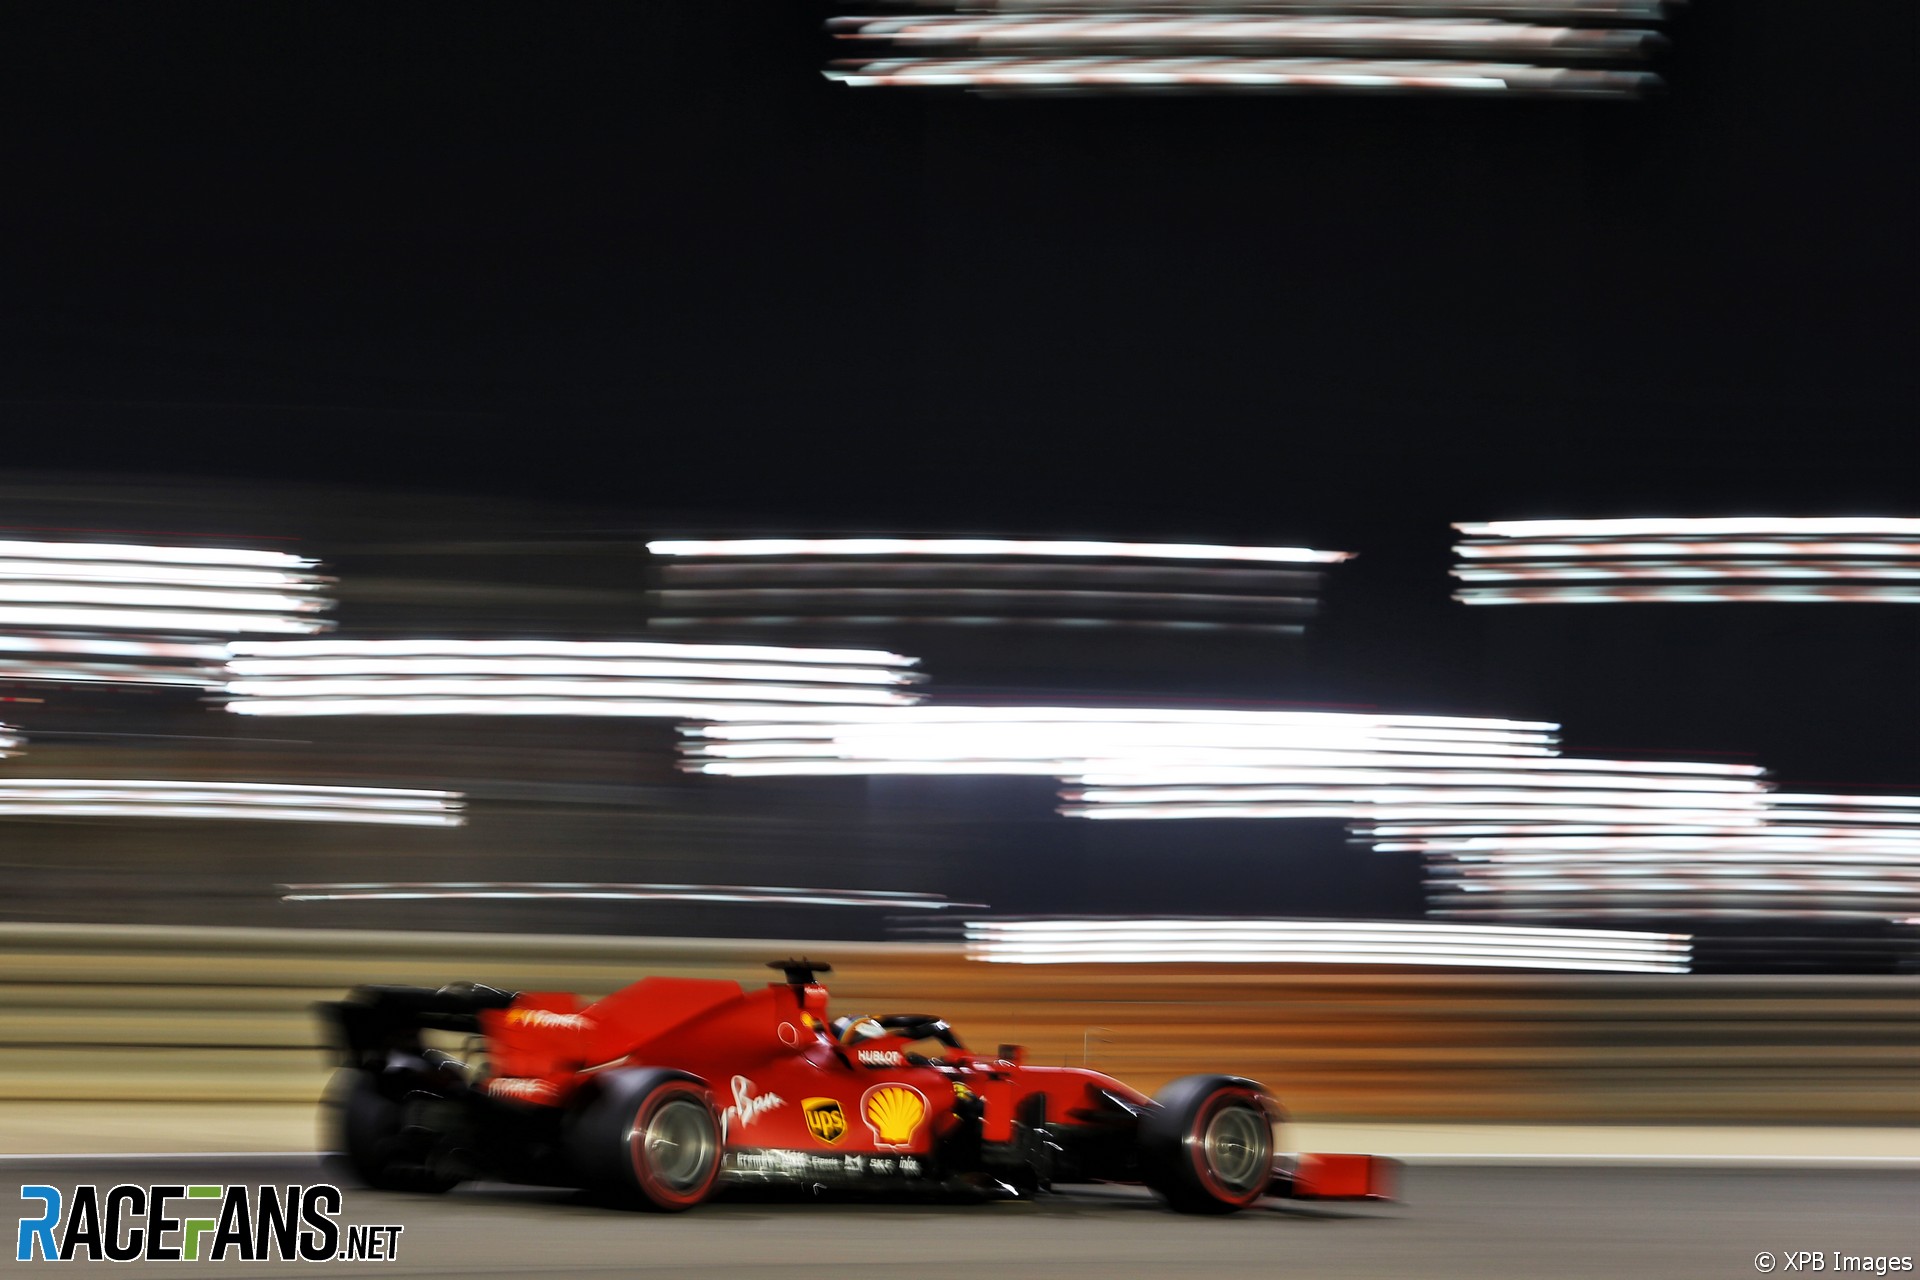 Sebastian Vettel, Ferrari, Bahrain International Circuit, 2020